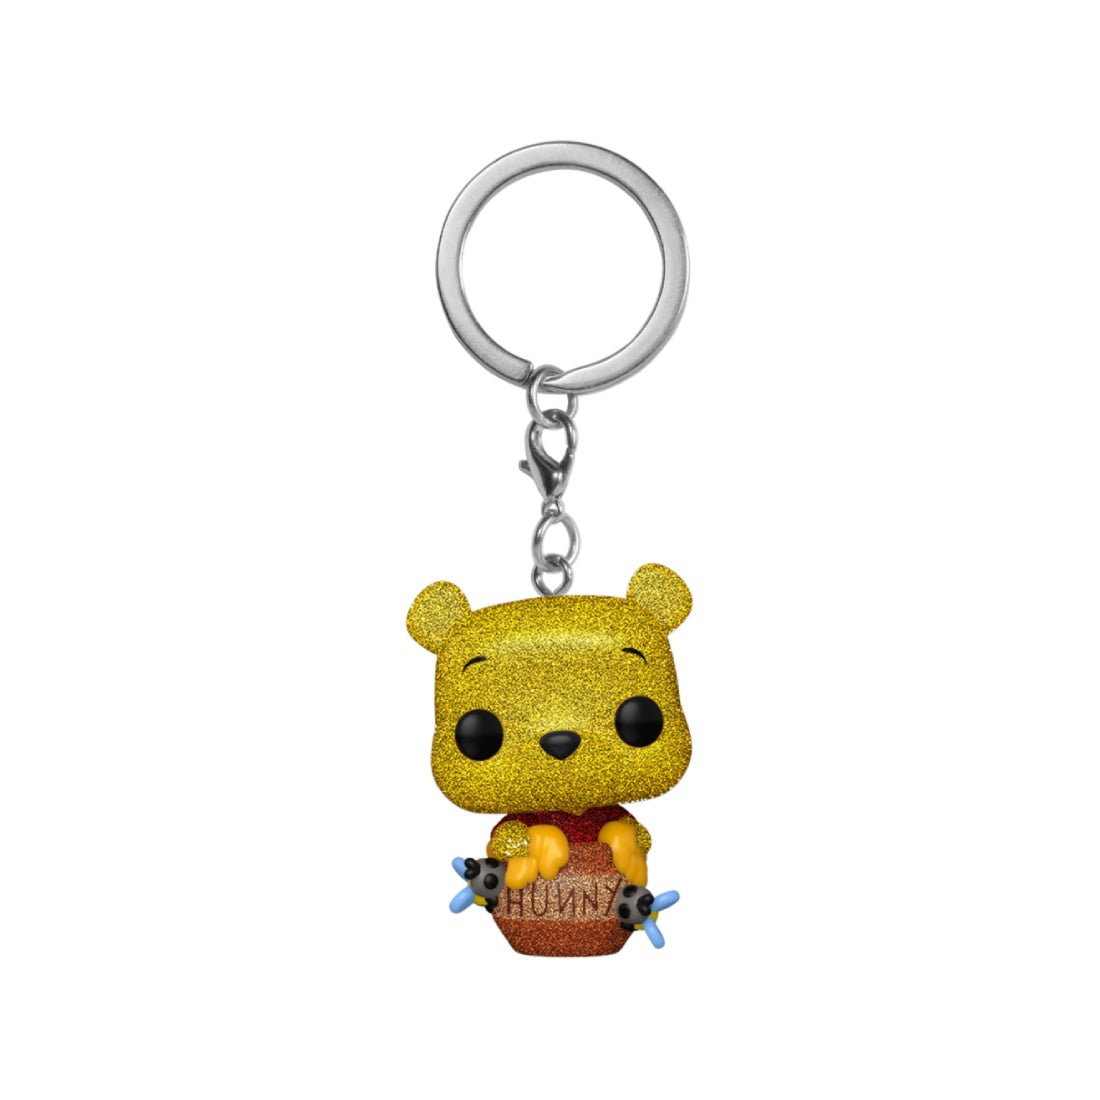 Funko Pocket Pop! Disney: Winnie the Pooh (DGLT) - دمية - Store 974 | ستور ٩٧٤